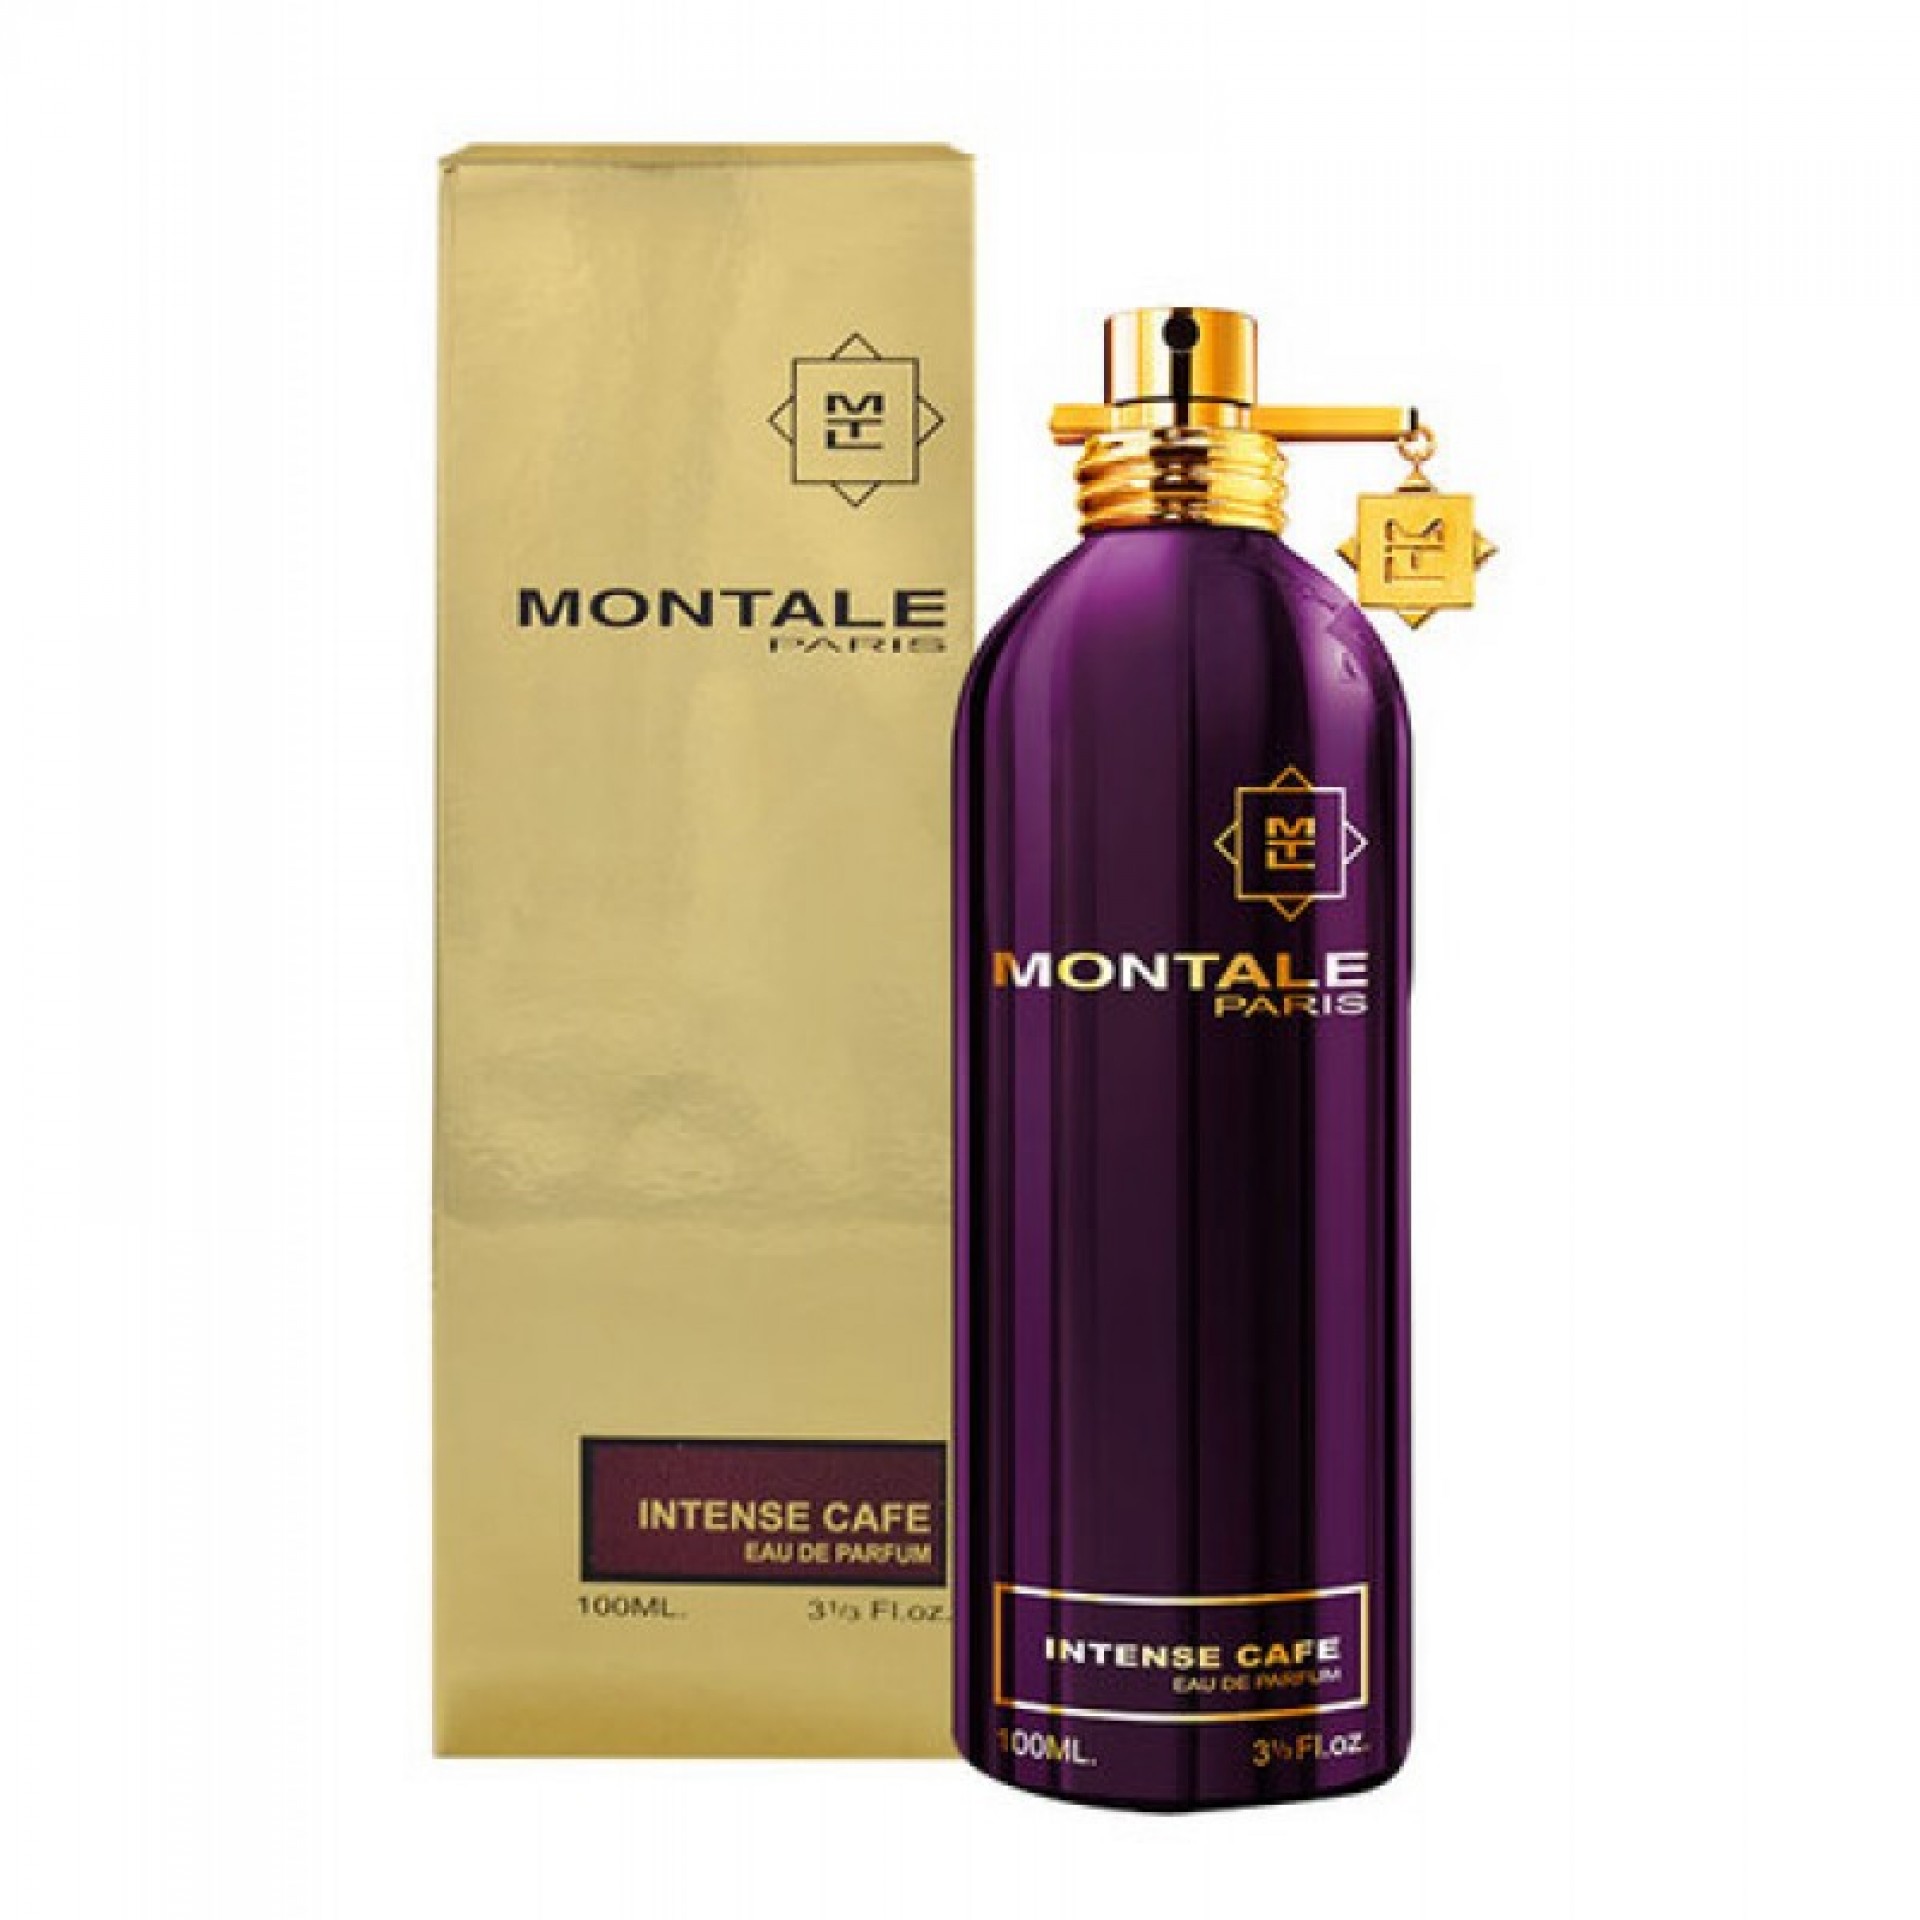 Montale intense купить. Montale Dark Purple 100 ml. Монталь дарк перпл. Montale intense Cafe. Montale intense Cafe 100ml.